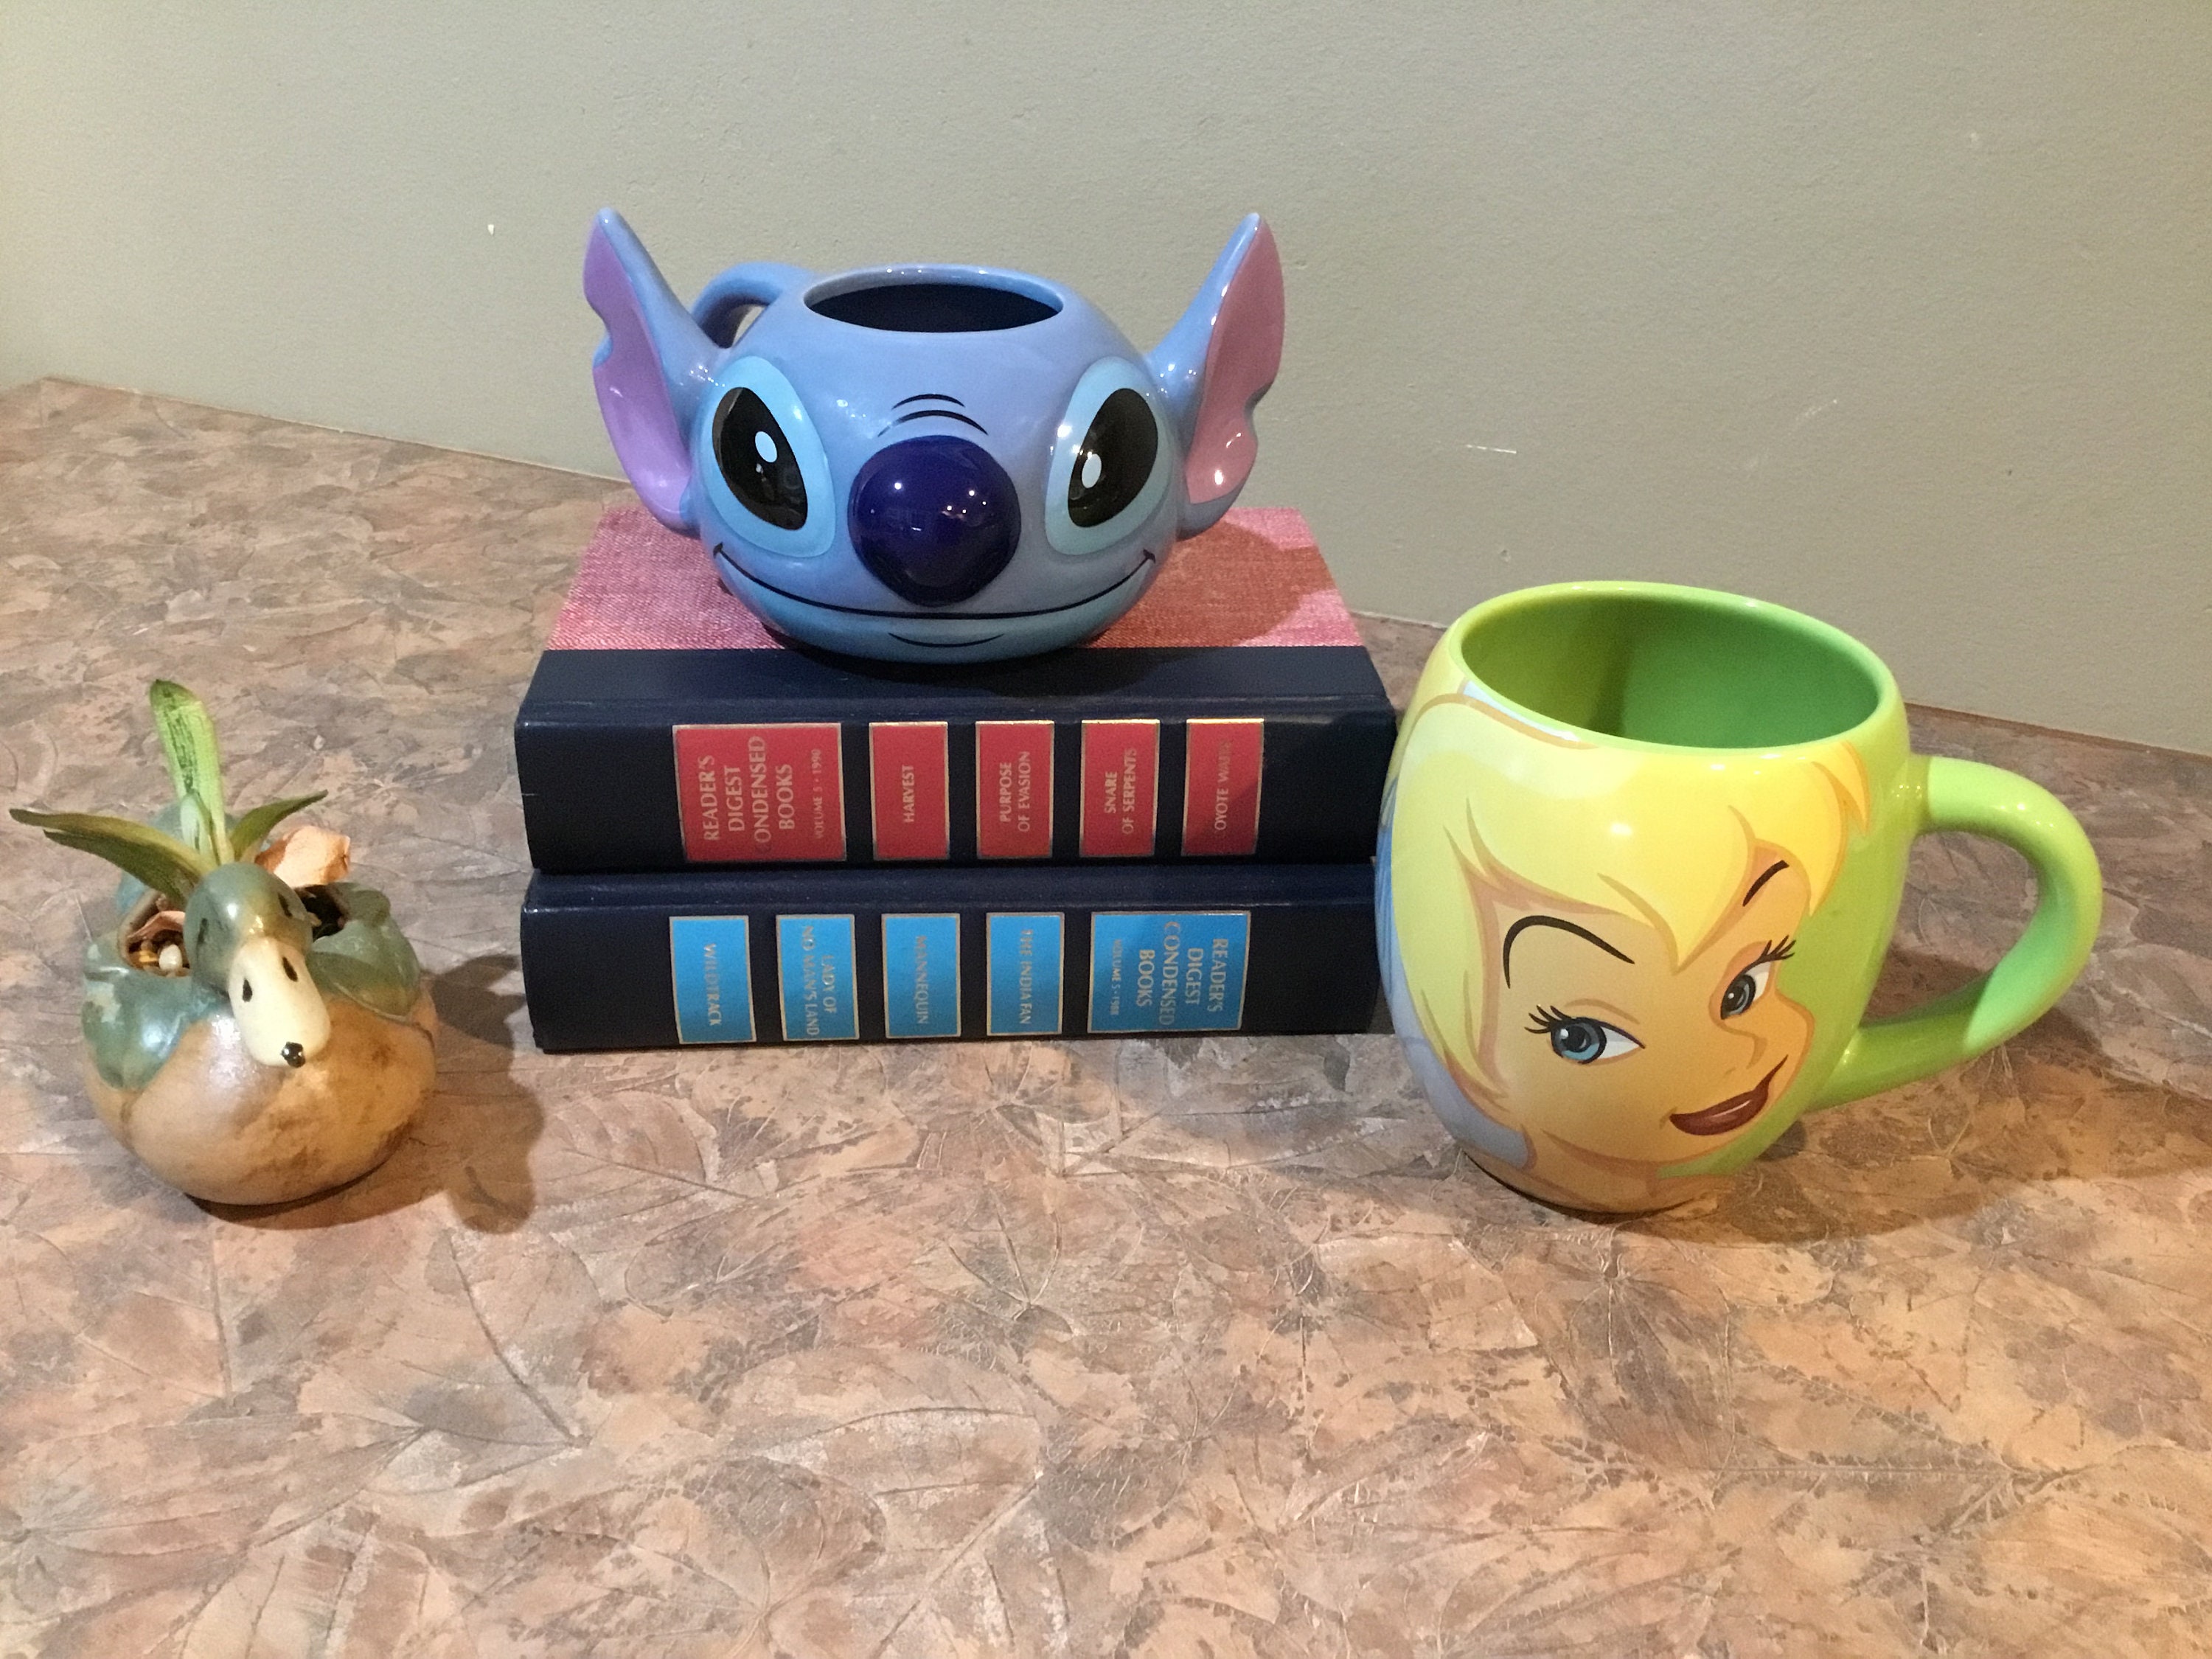 Disney's Lilo & Stitch Shaped Mug